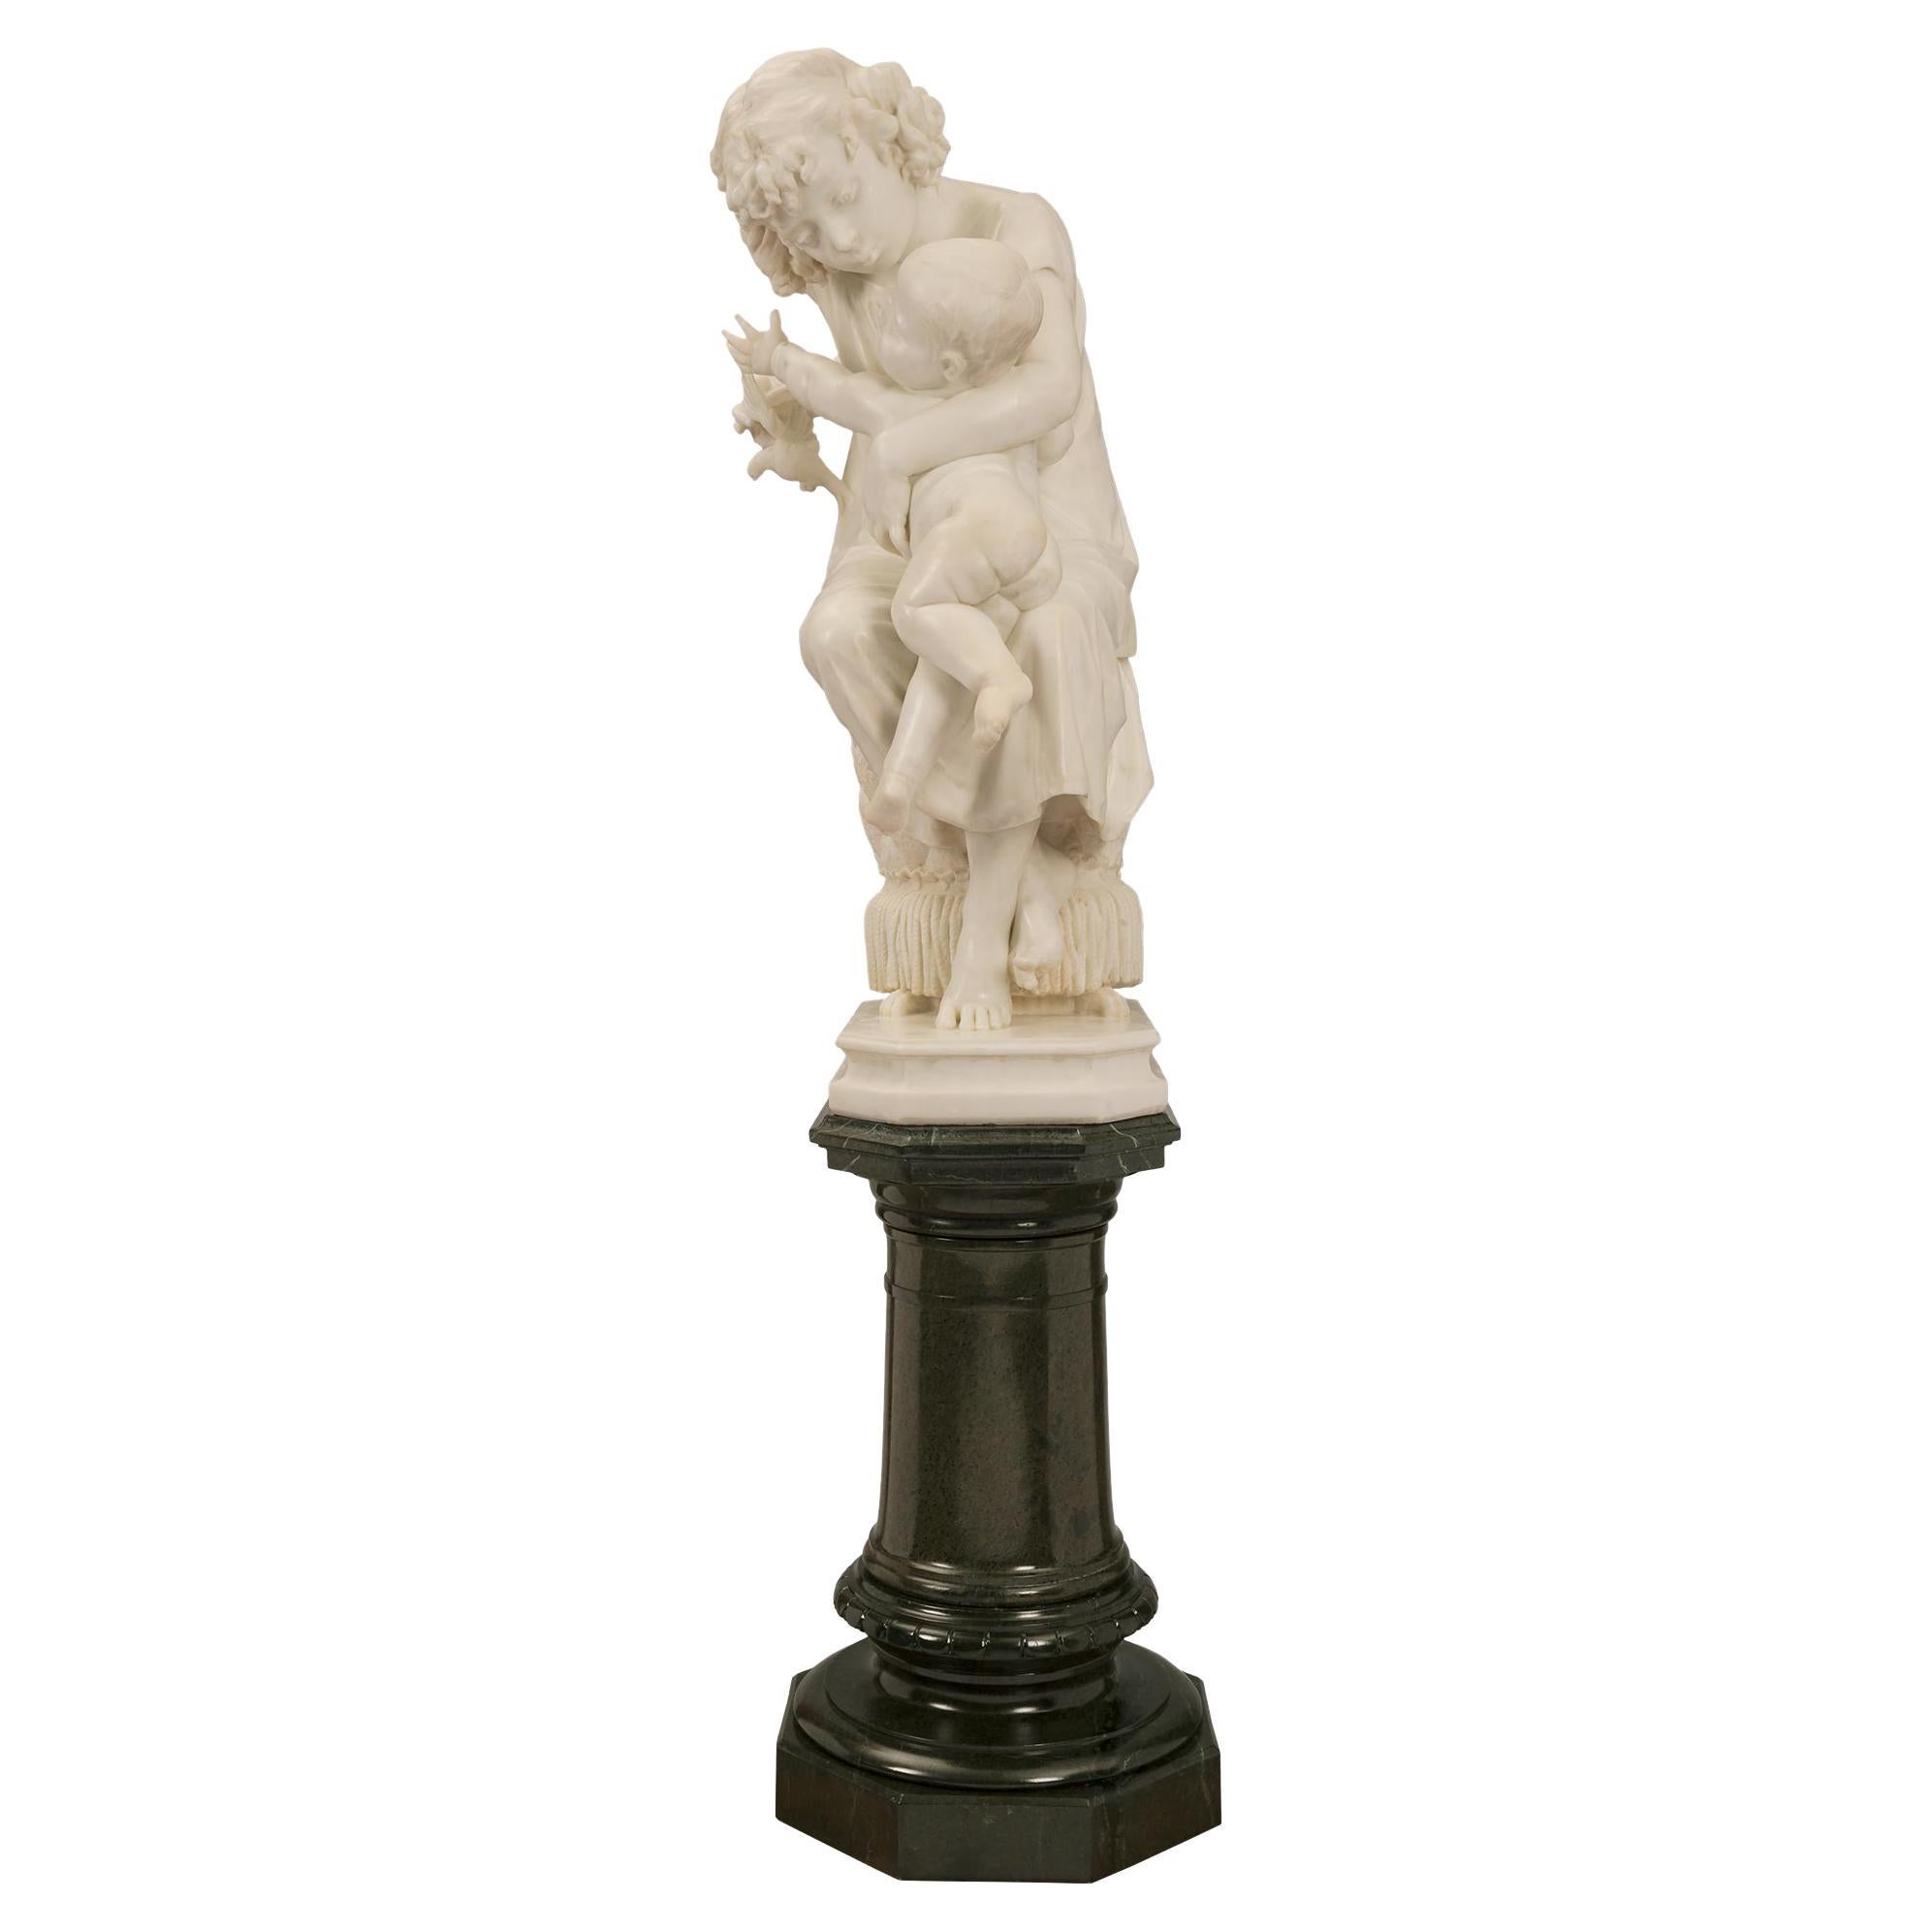 Italian 19th Century White Carrara Marble Statue on Its Original Swivel Pedestal